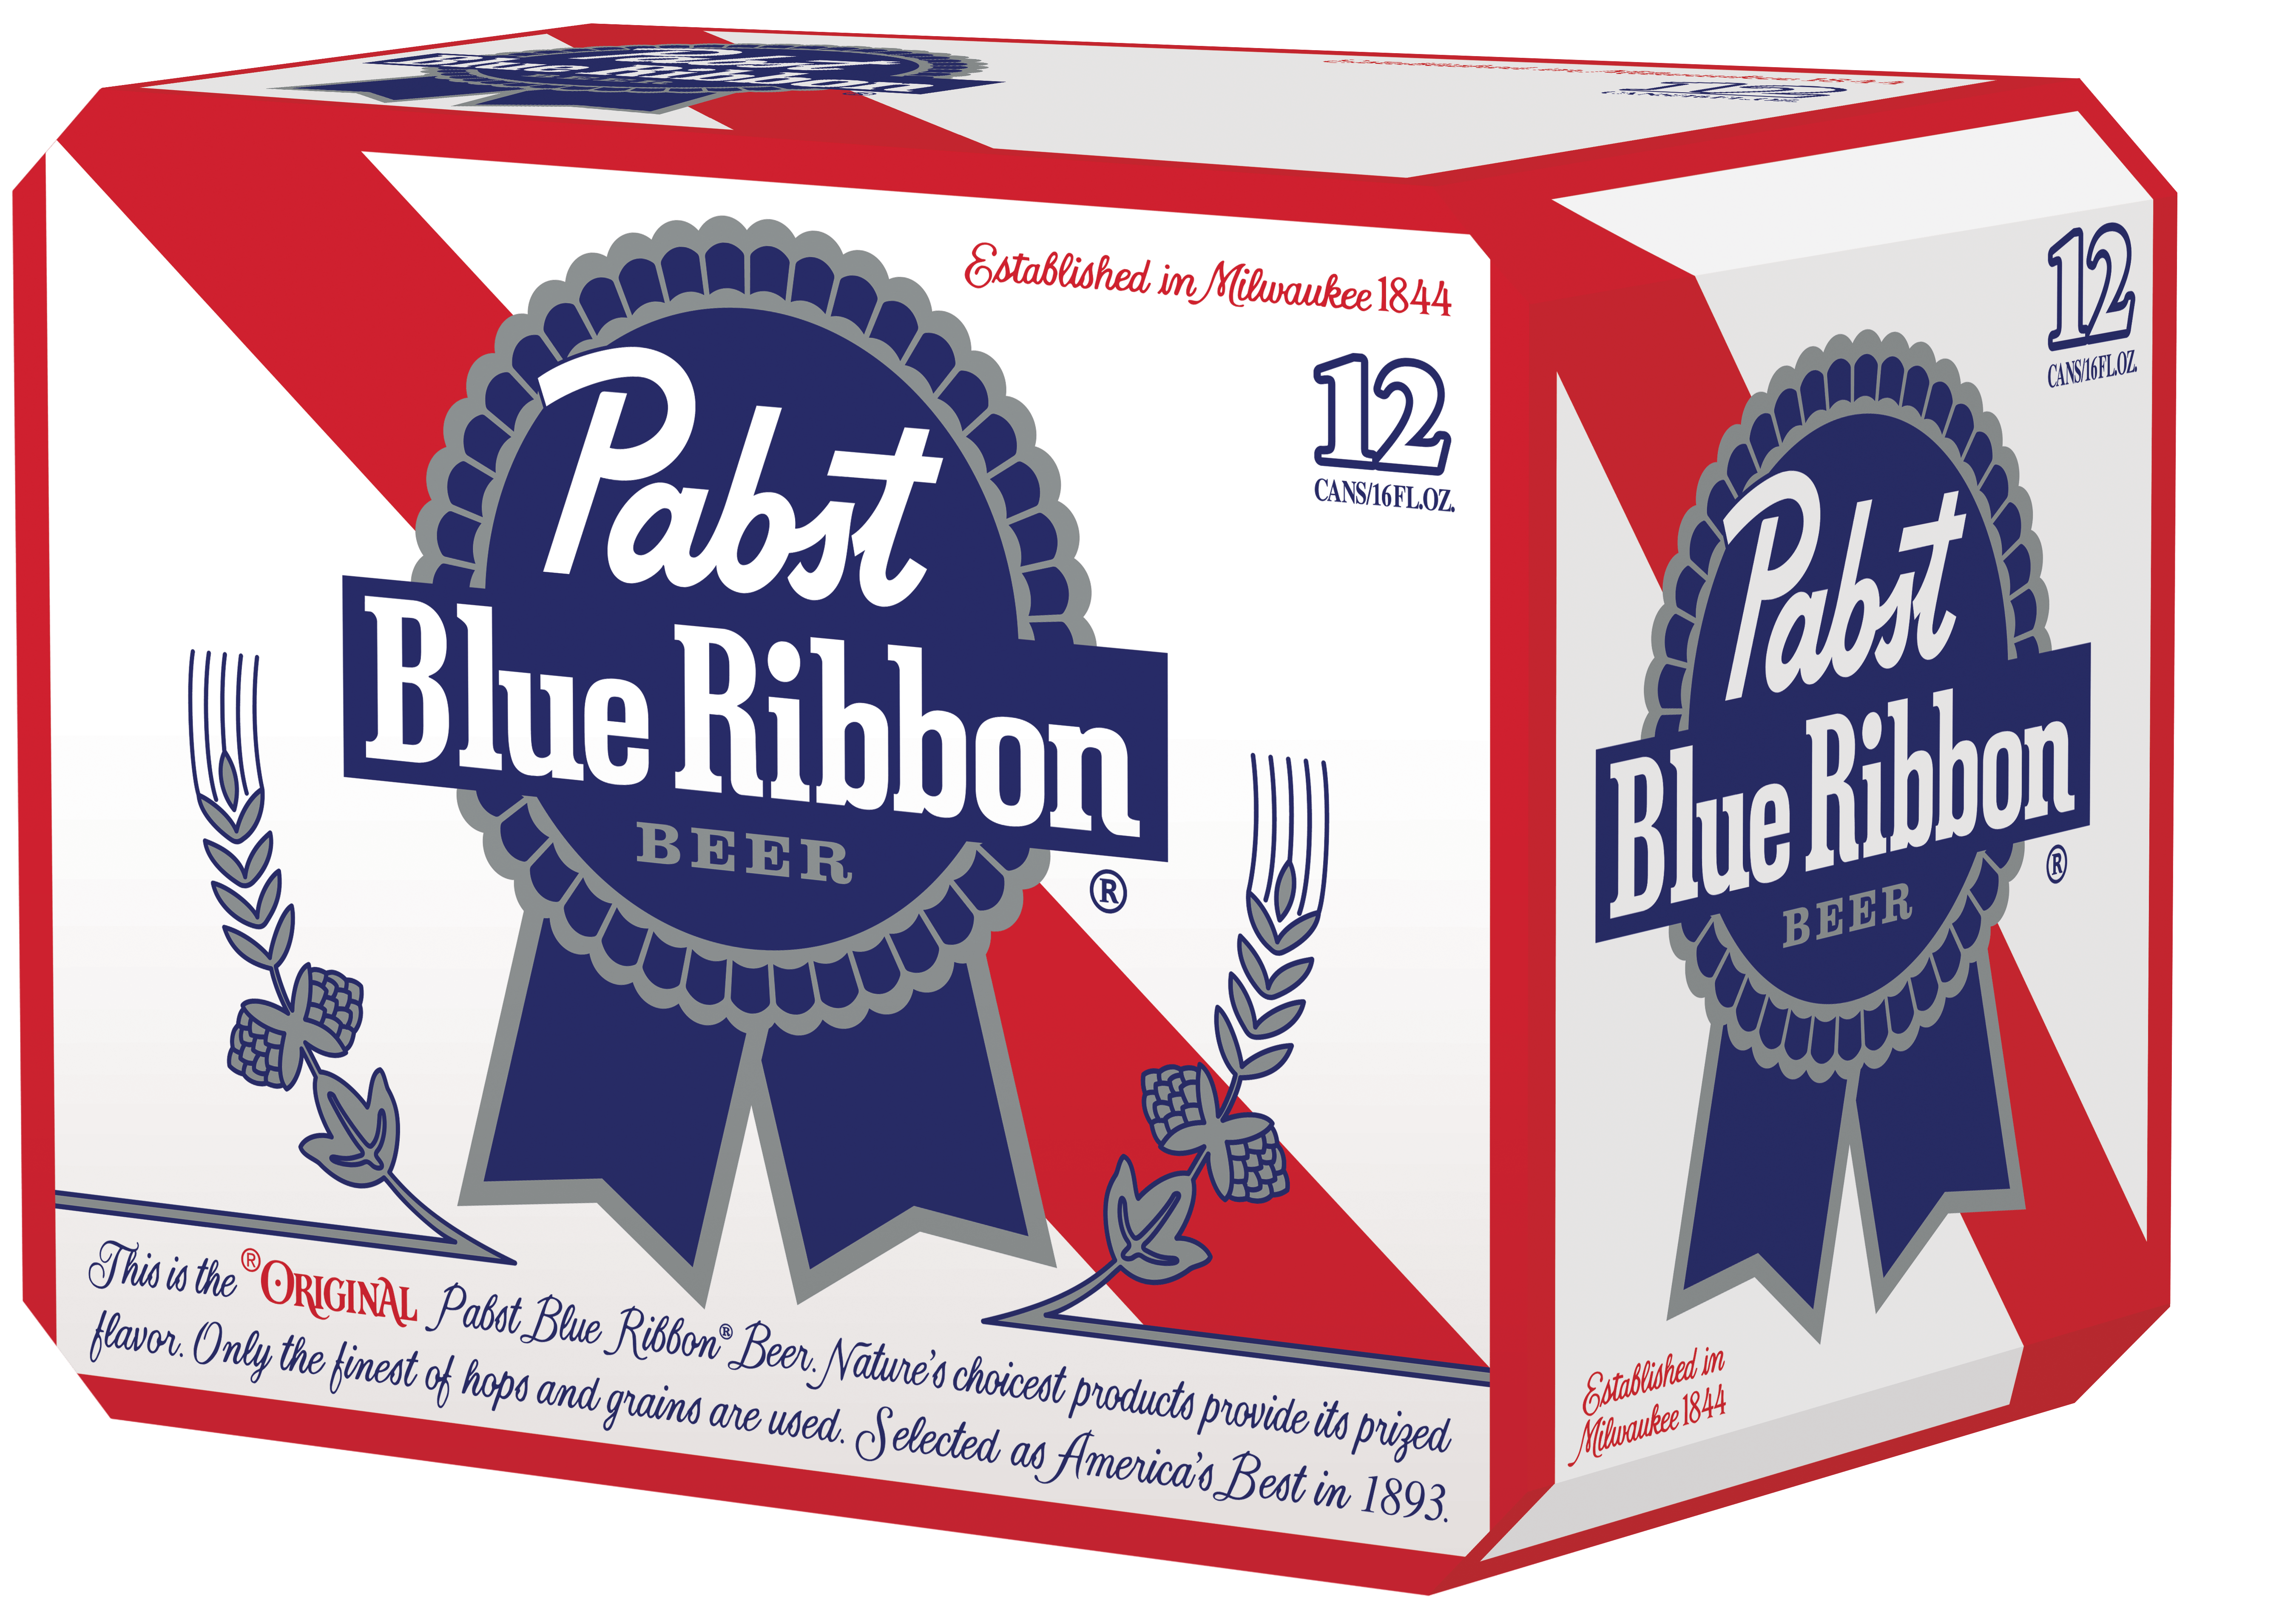 Pabst Blue Ribon